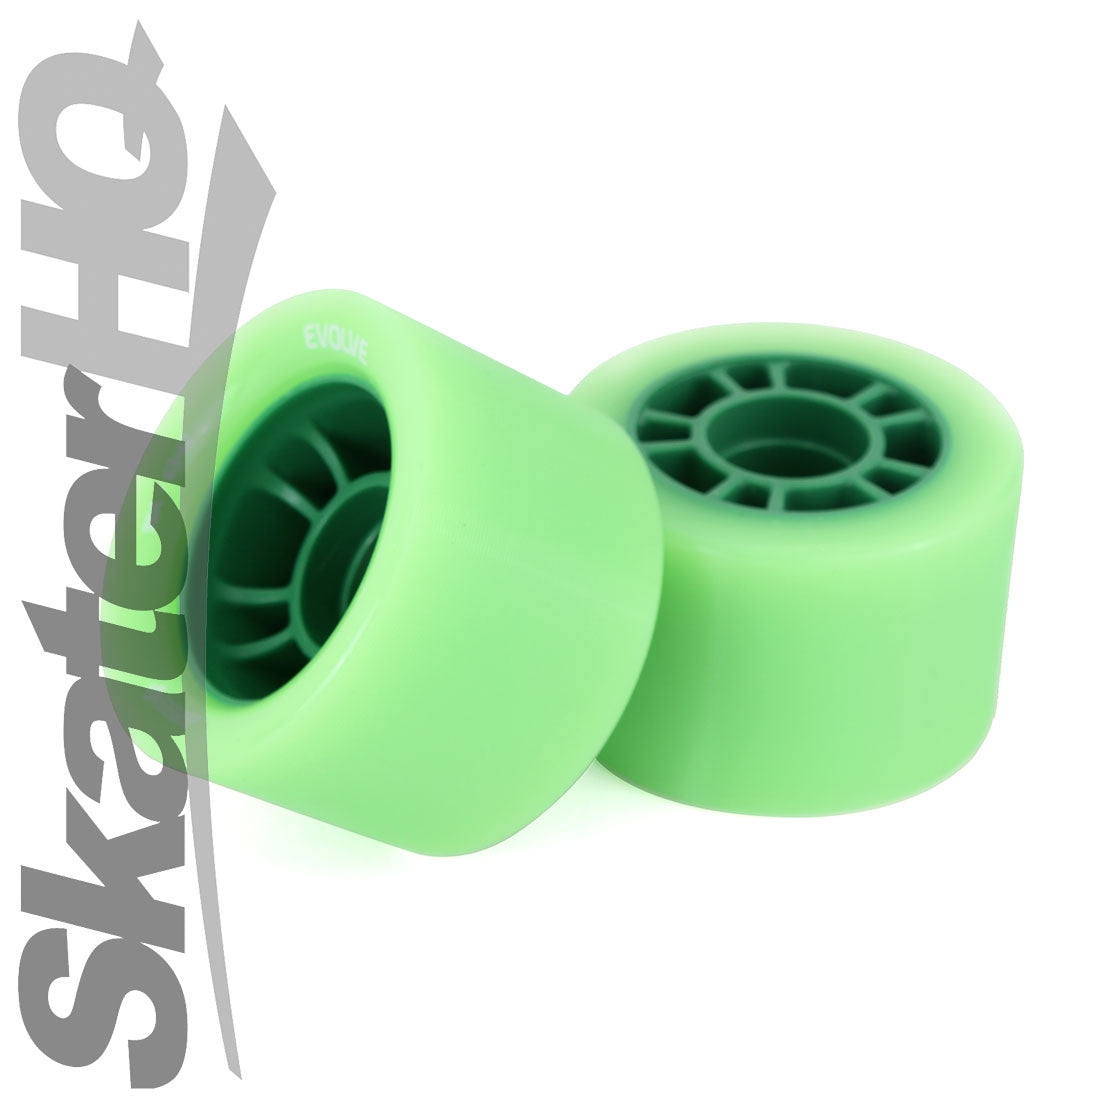 Bont Evolve Speed 63x42mm 96a 4pk - Green Roller Skate Wheels